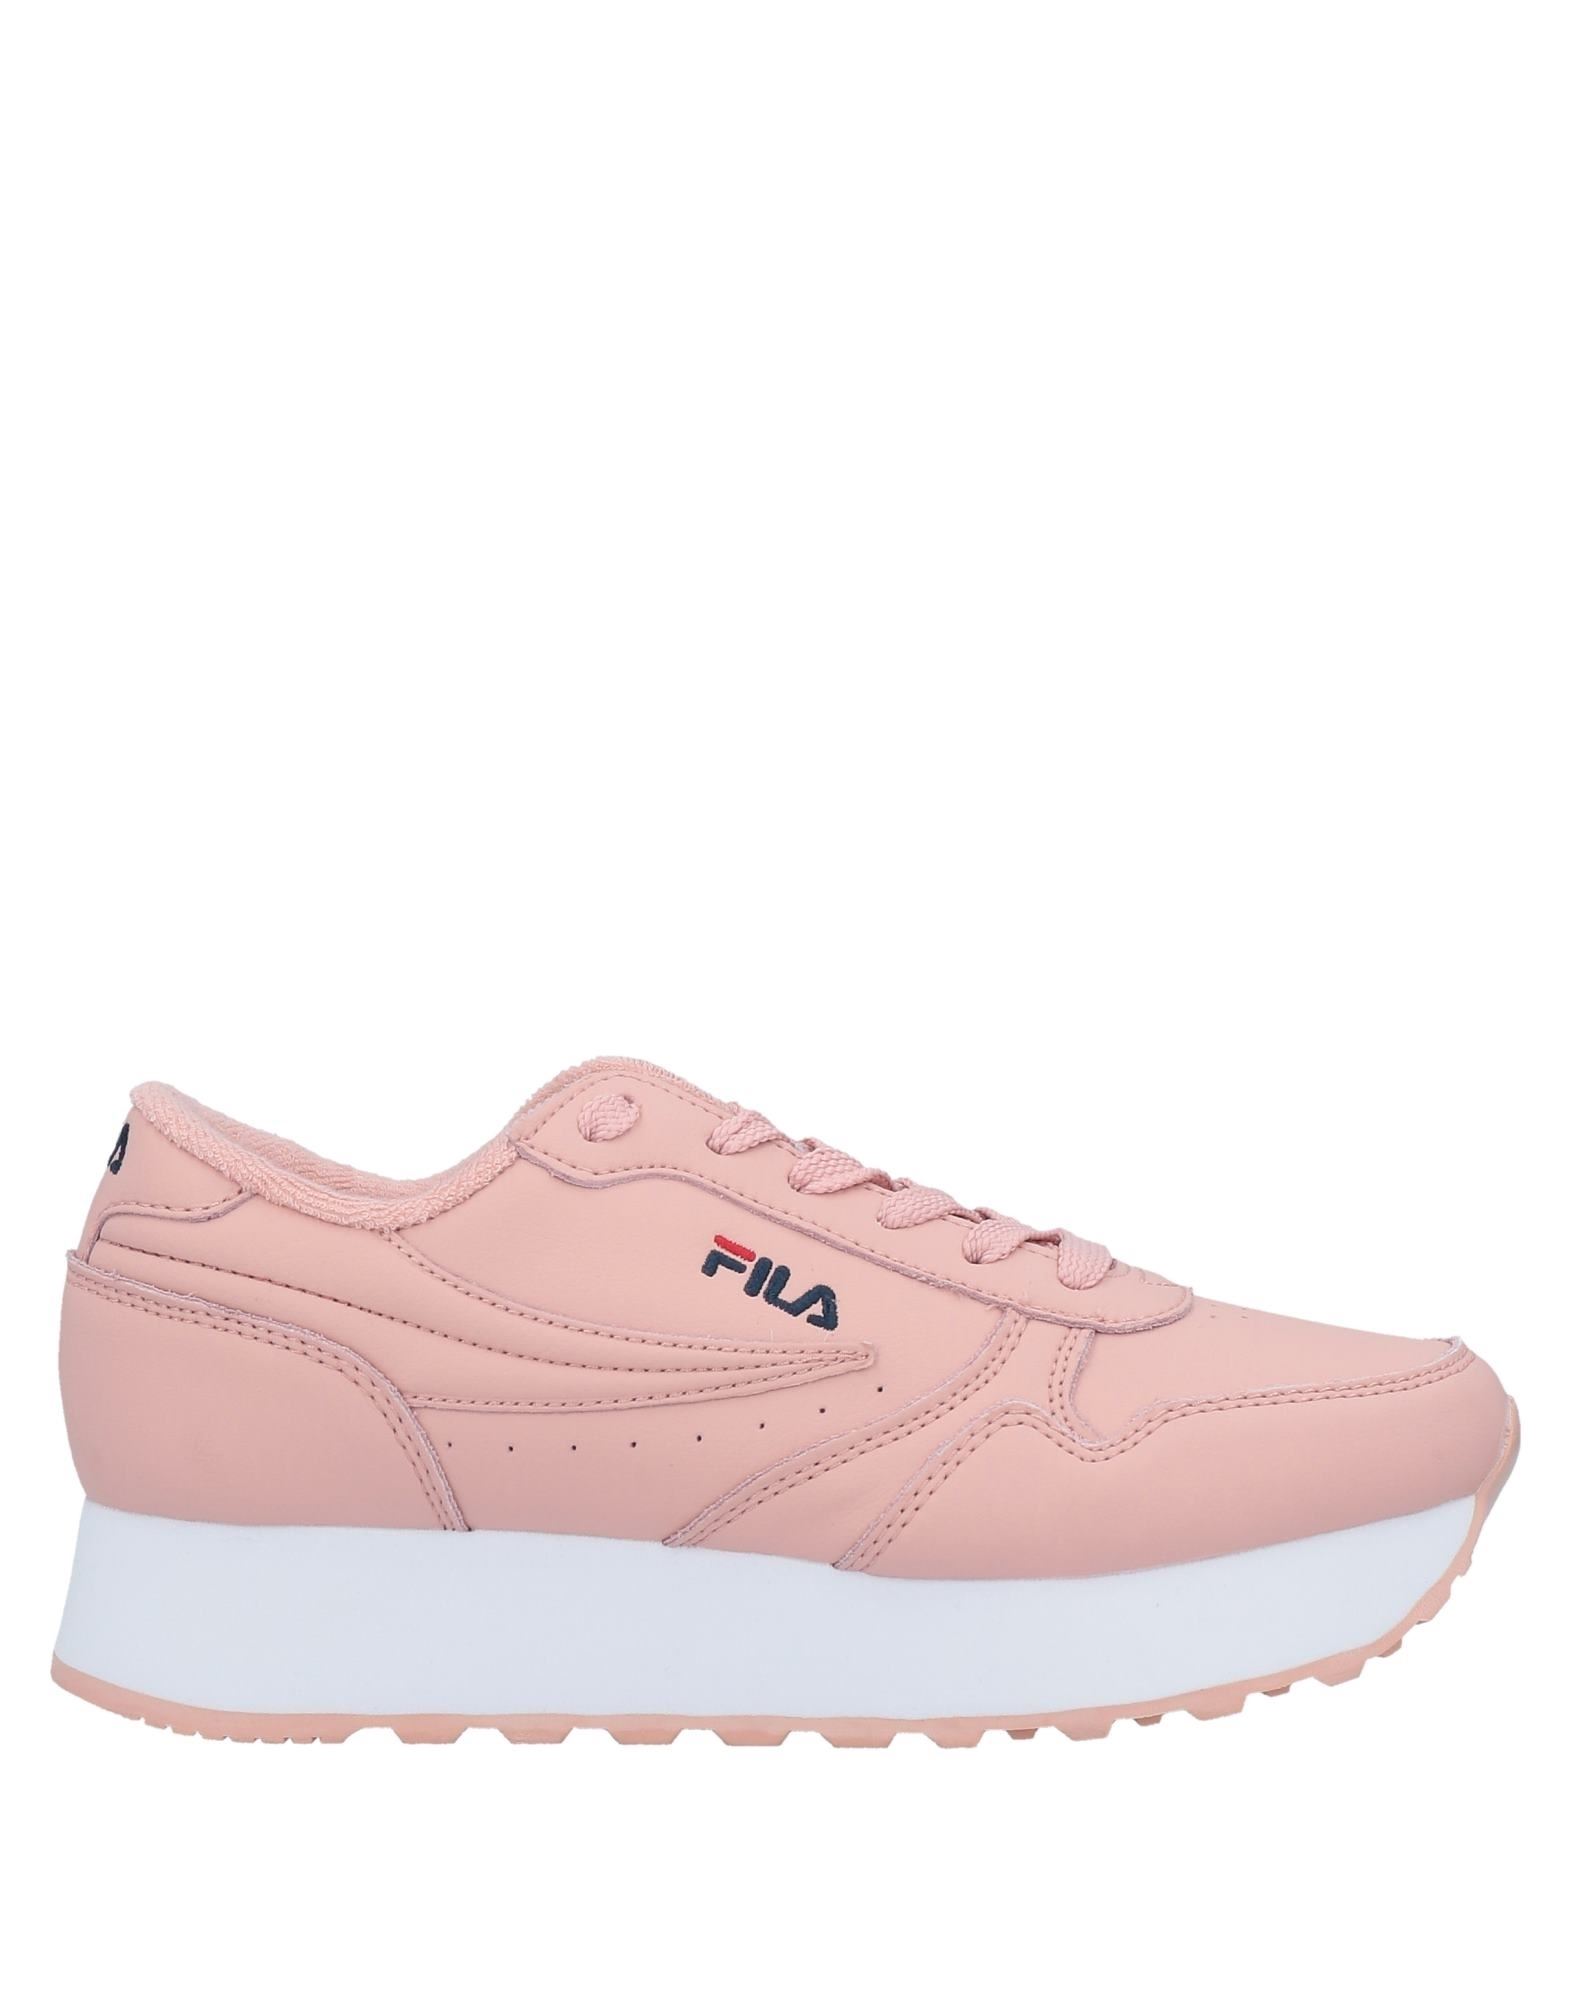 Fila Sneakers In Pale Pink